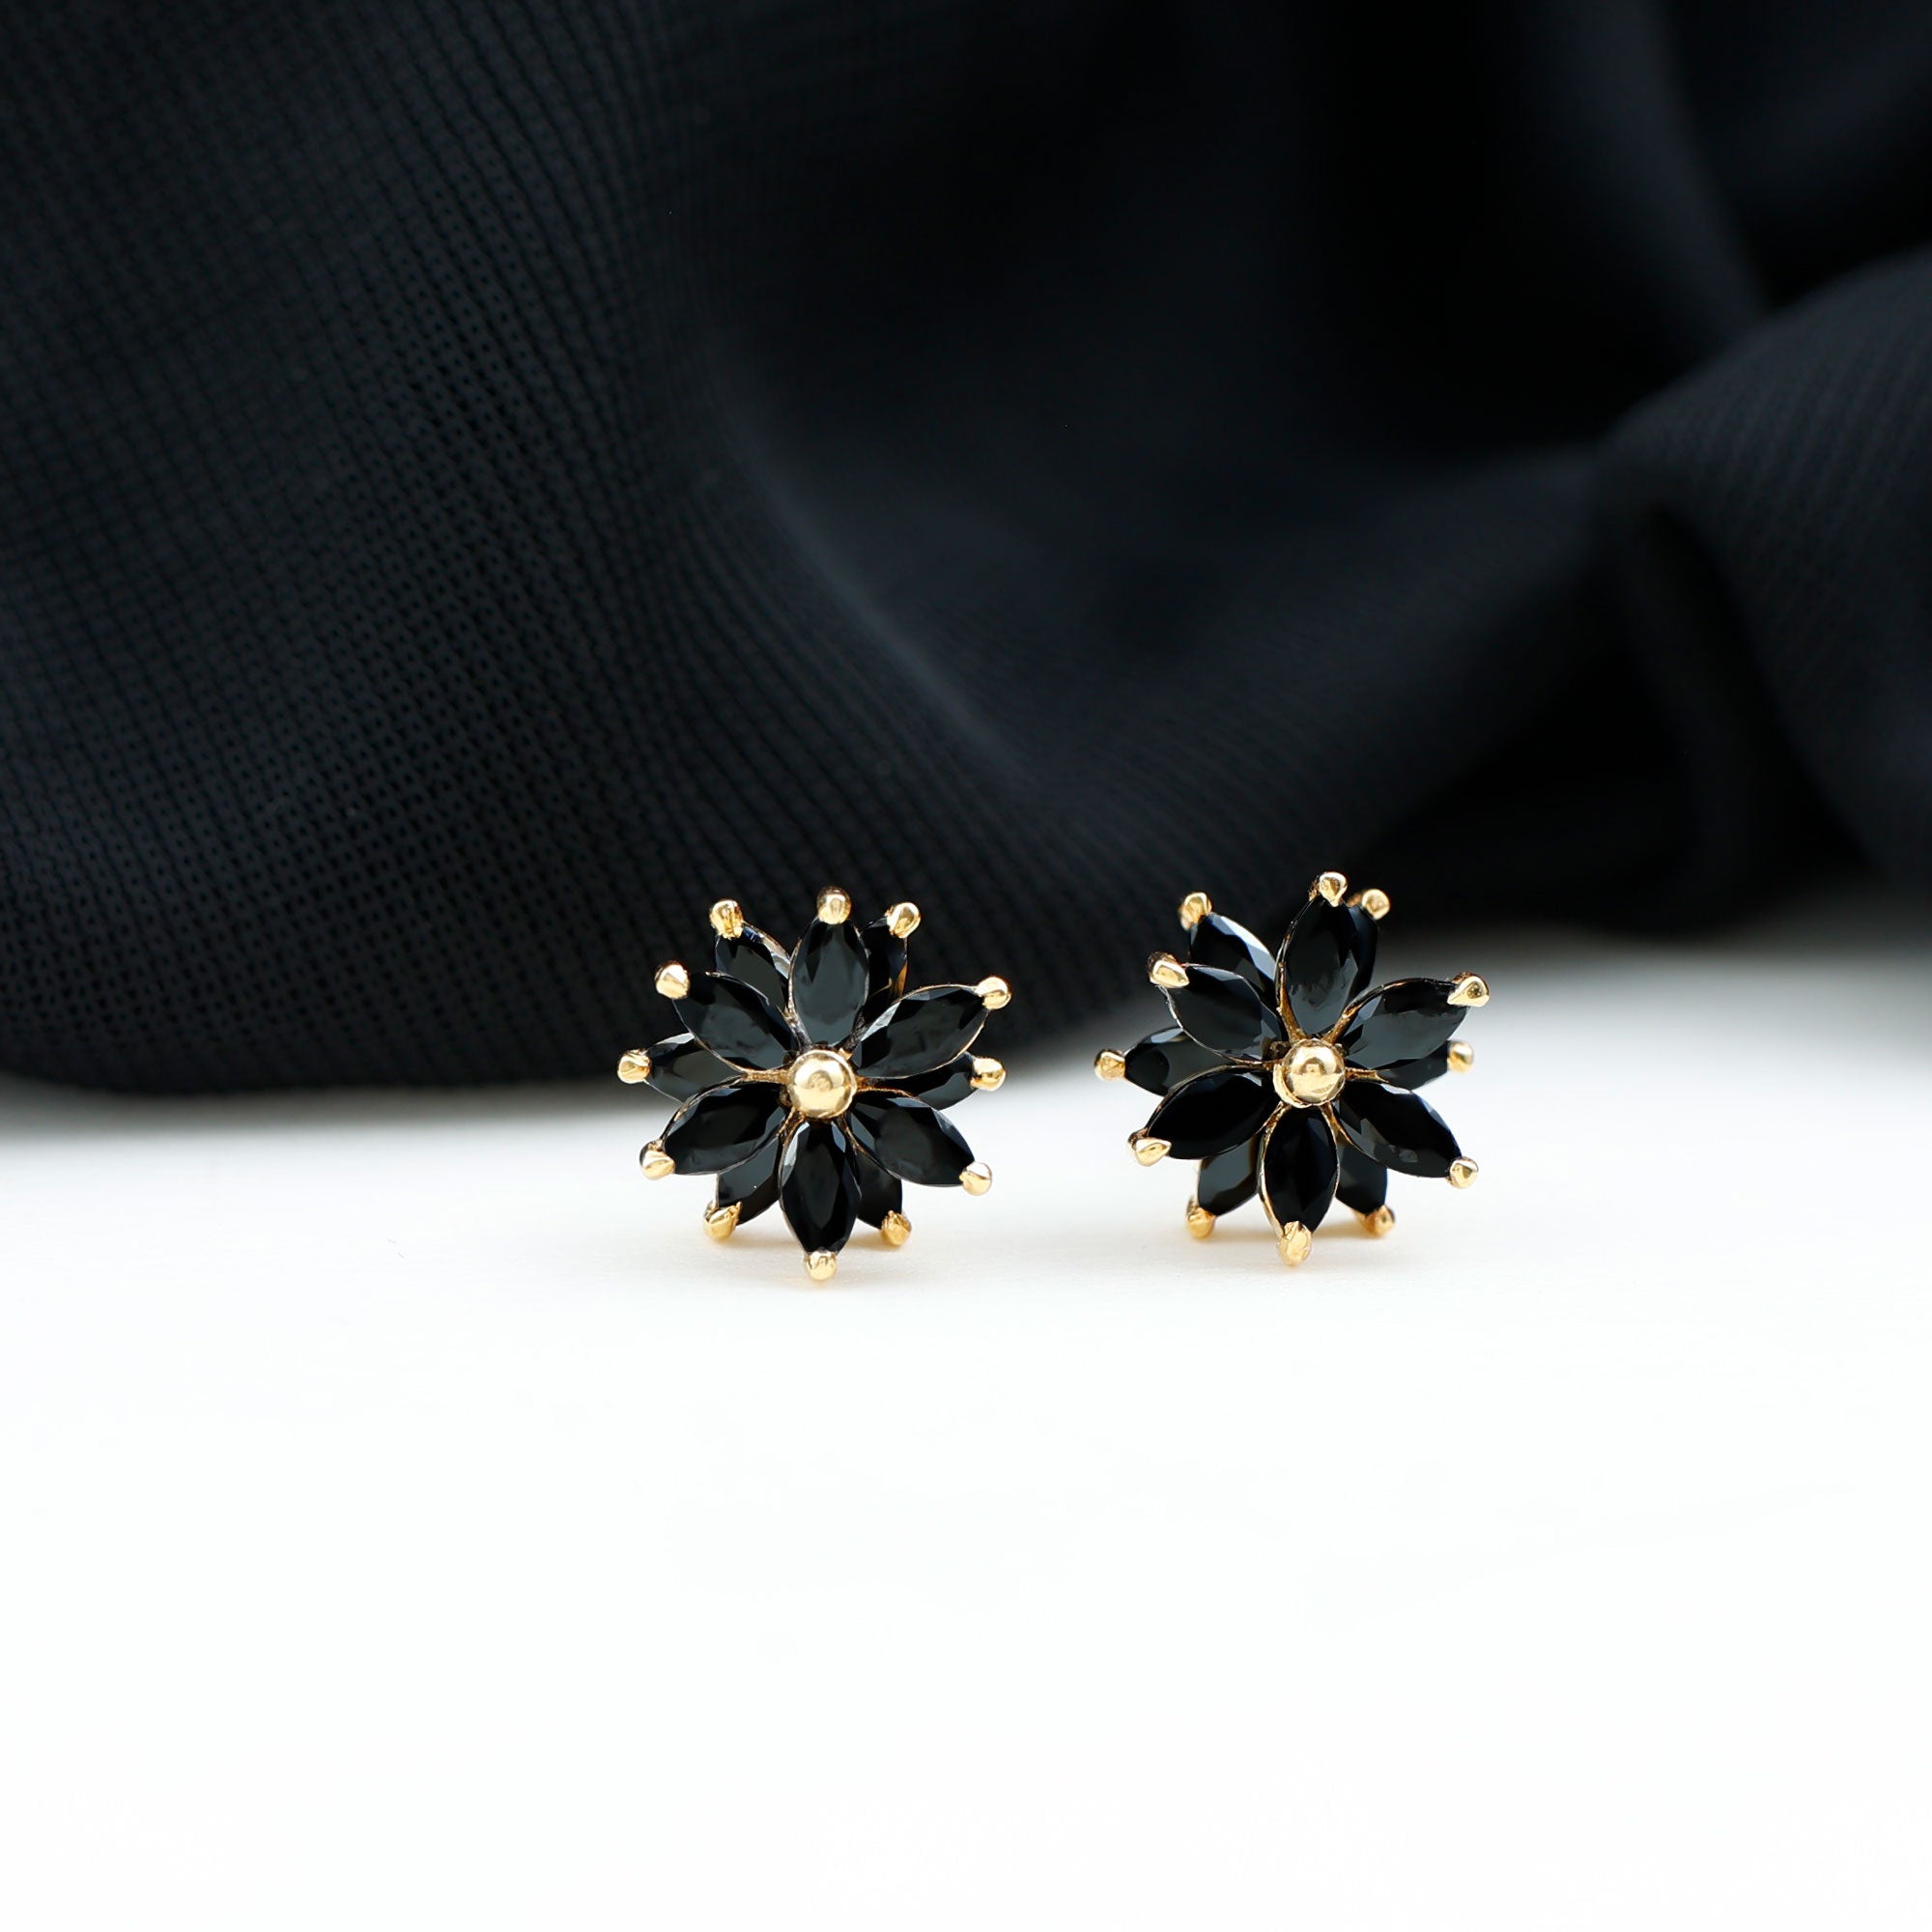 3 CT Marquise Shape Black Onyx Floral Statement Stud Earrings Black Onyx - ( AAA ) - Quality - Rosec Jewels